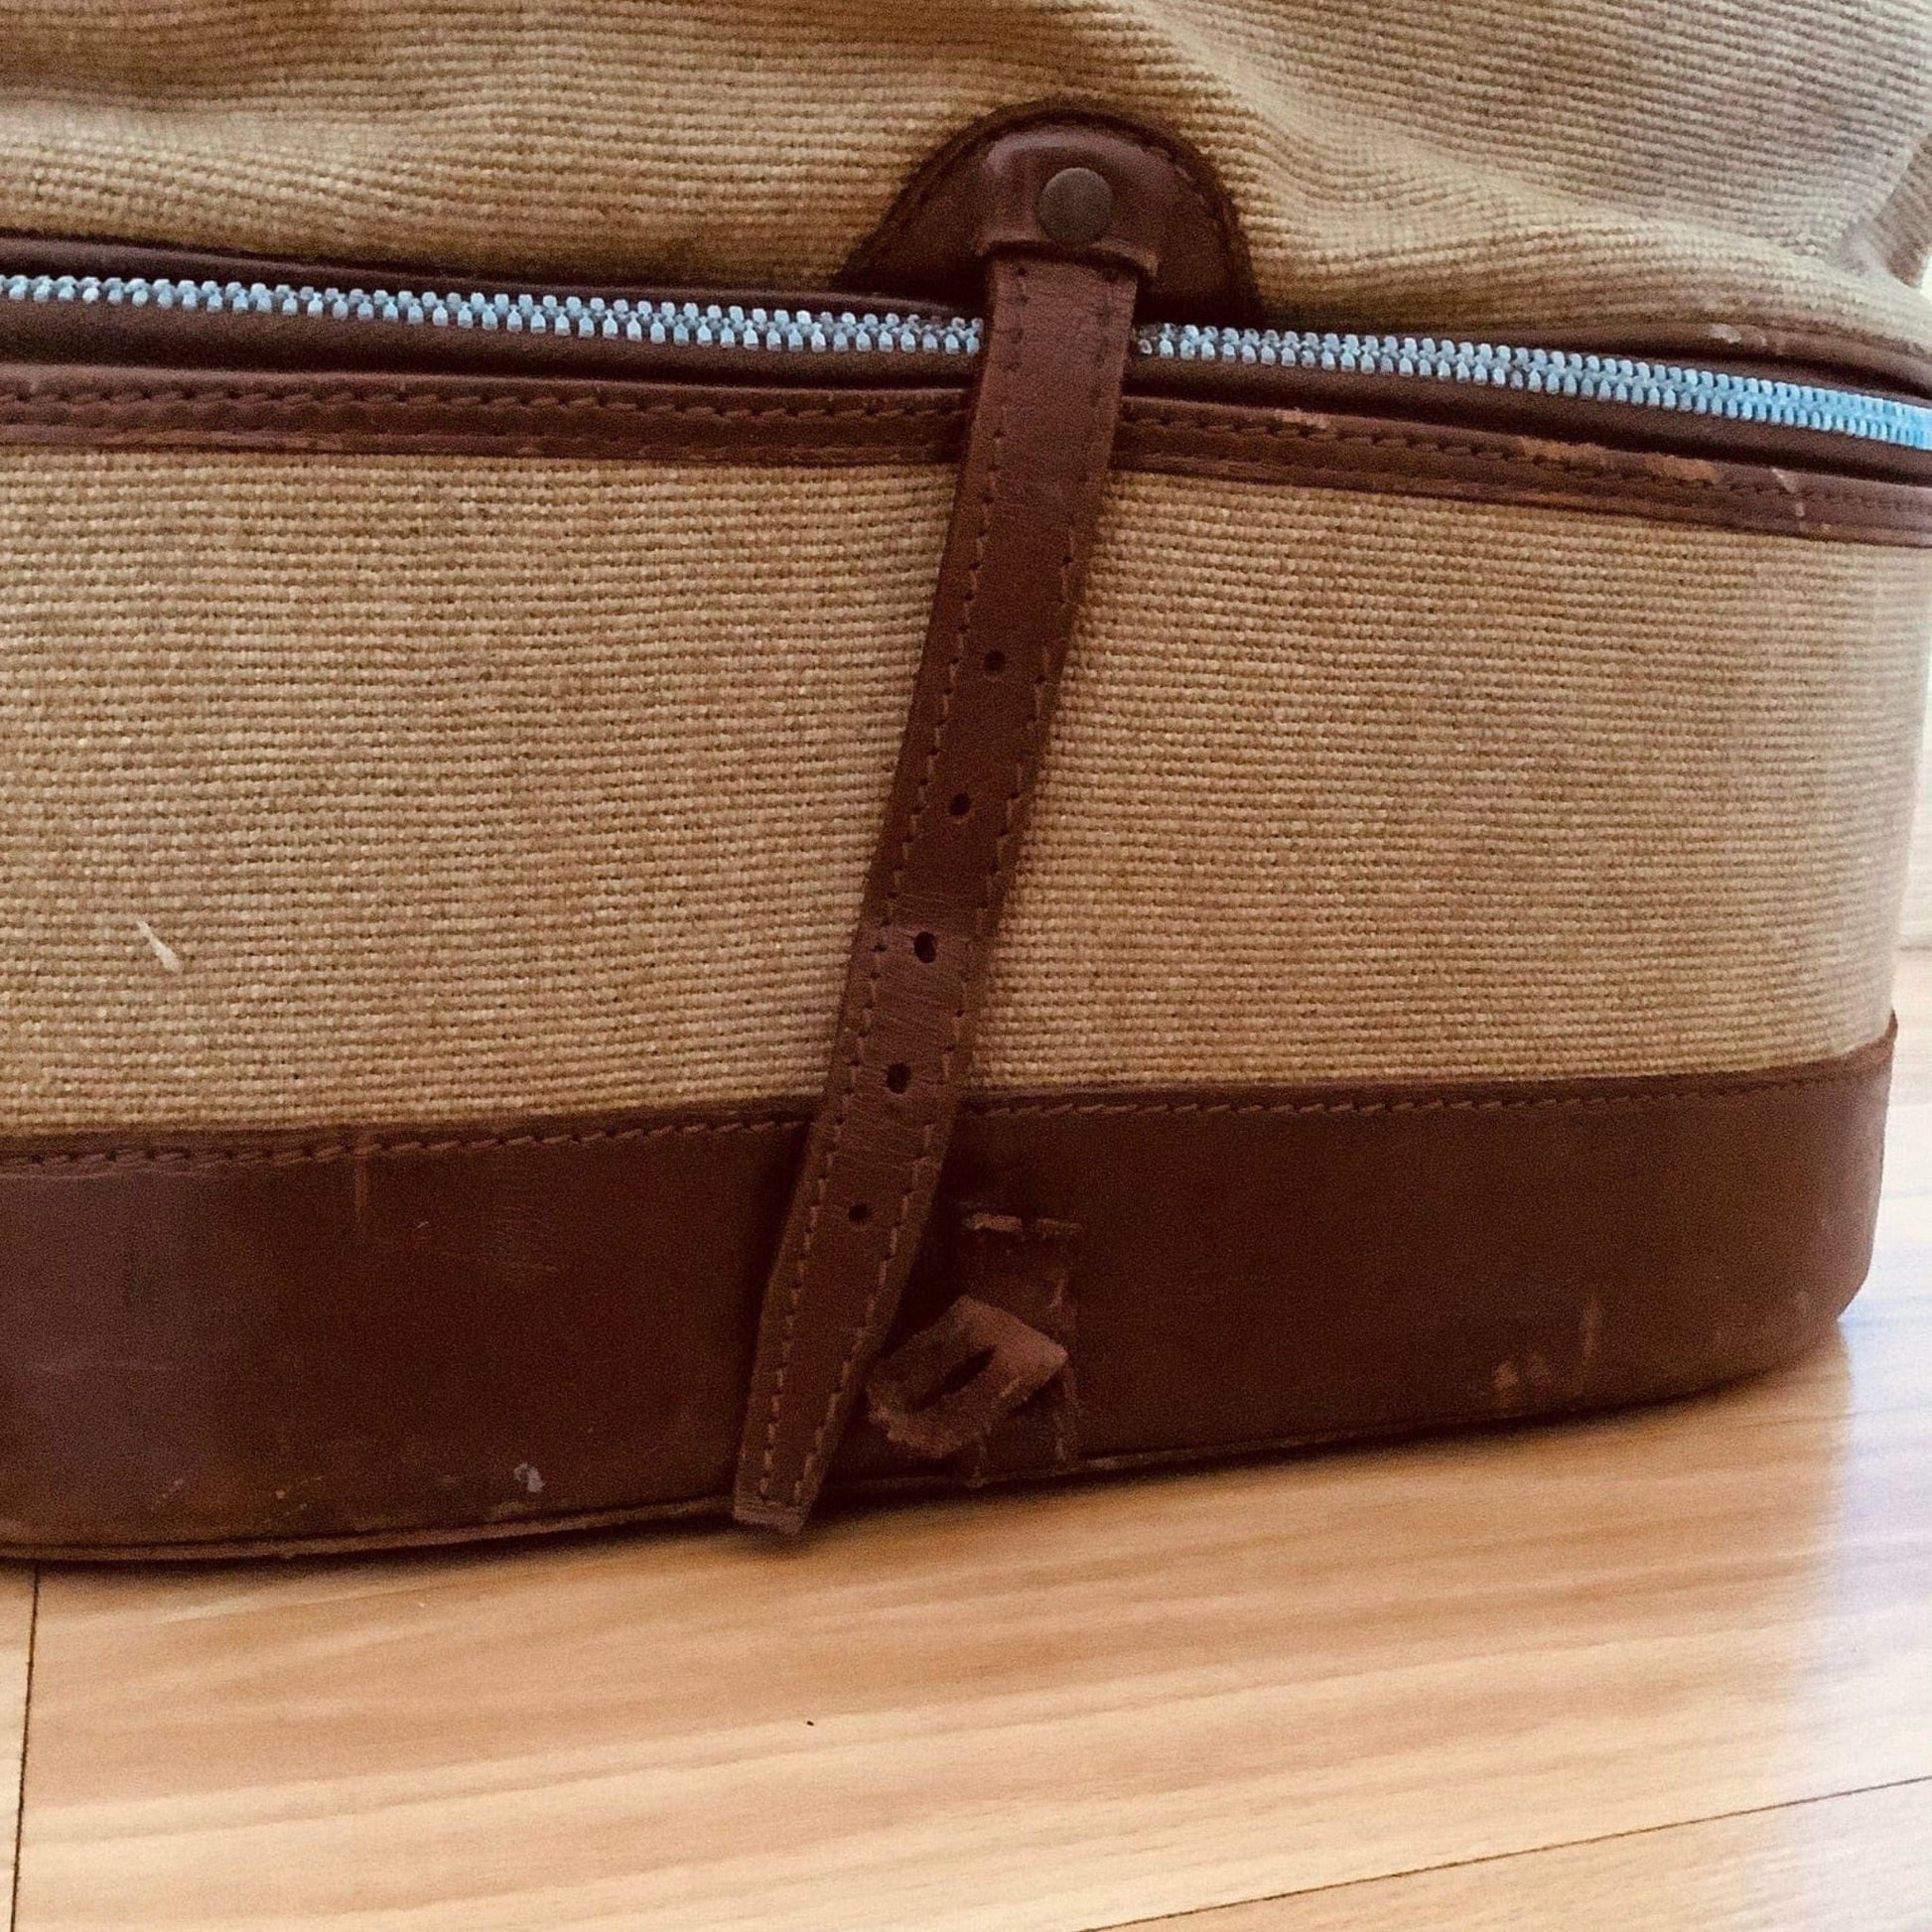 Dinoffer Luggage Travel Bag Tan / Canvas / Vintage 1940s